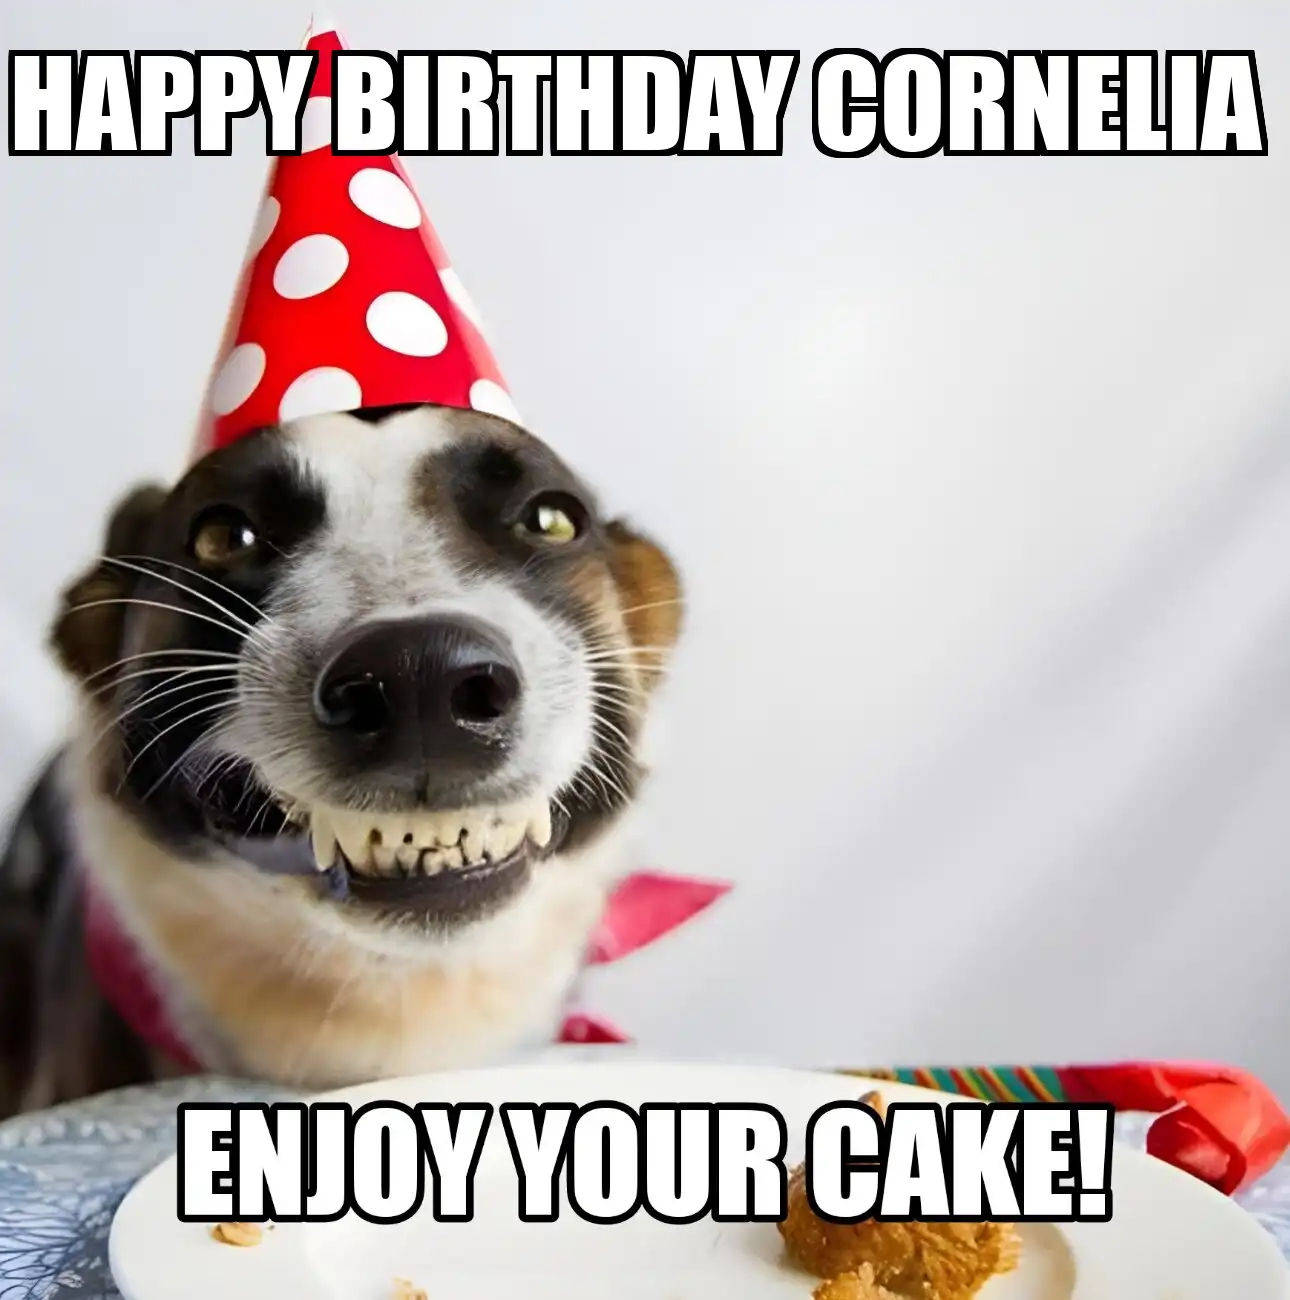 Happy Birthday Cornelia Enjoy Your Cake Dog Meme